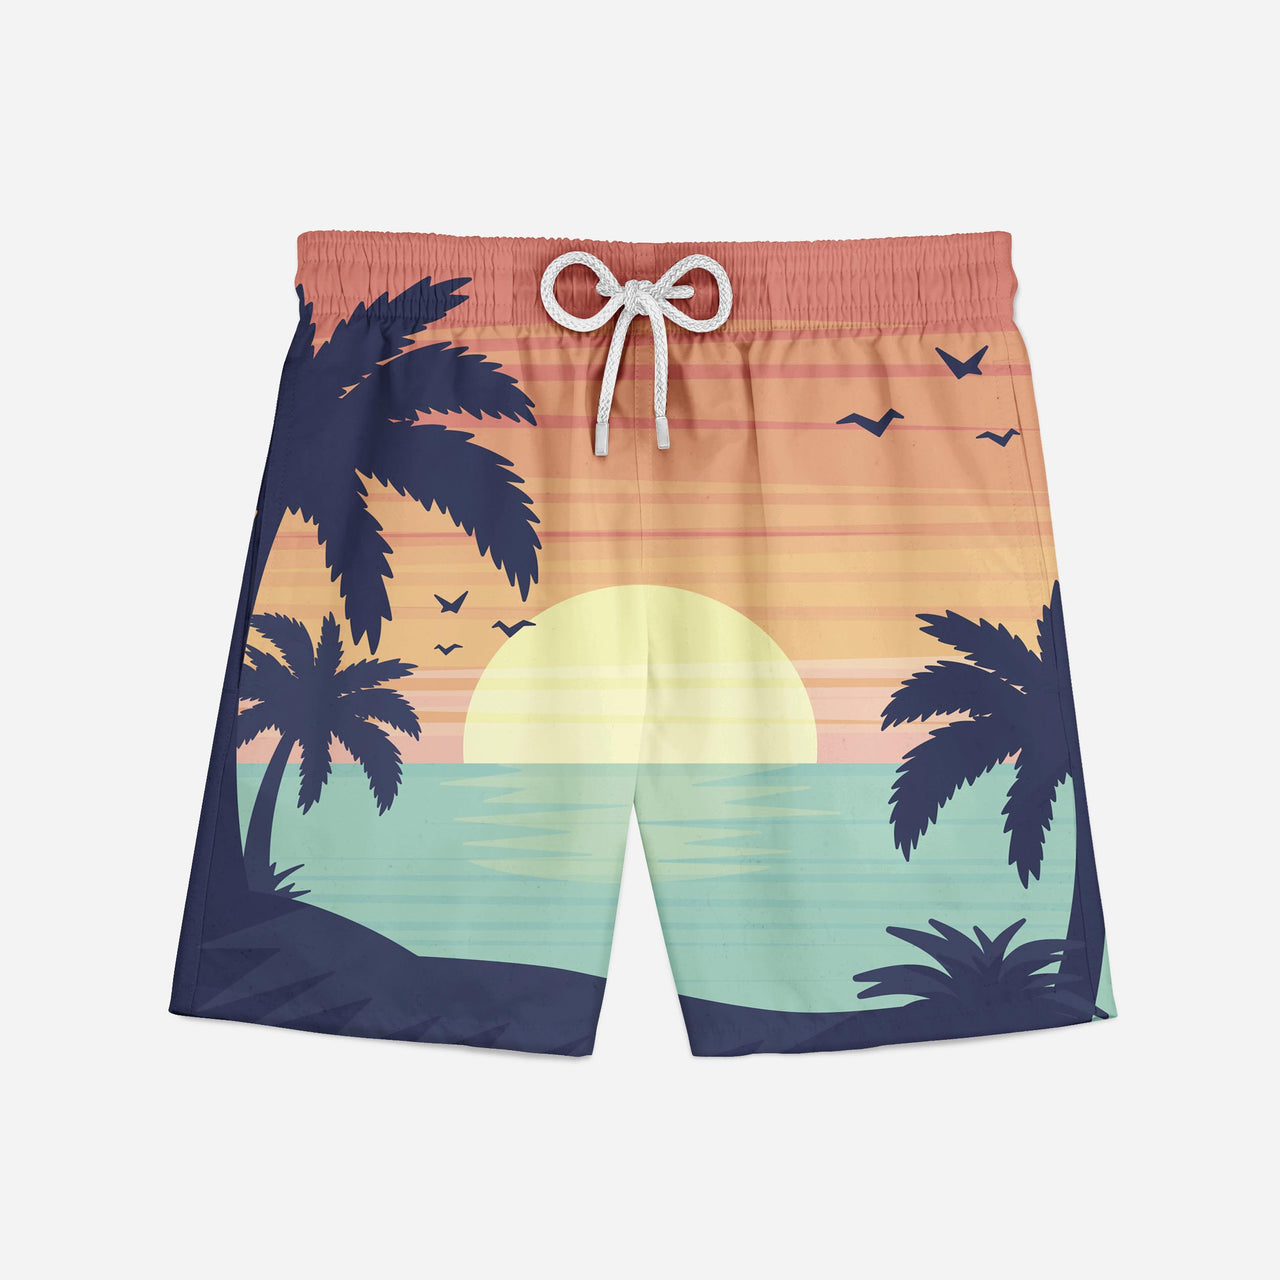 Tropical Summer Theme Designed Swim Trunks & Shorts